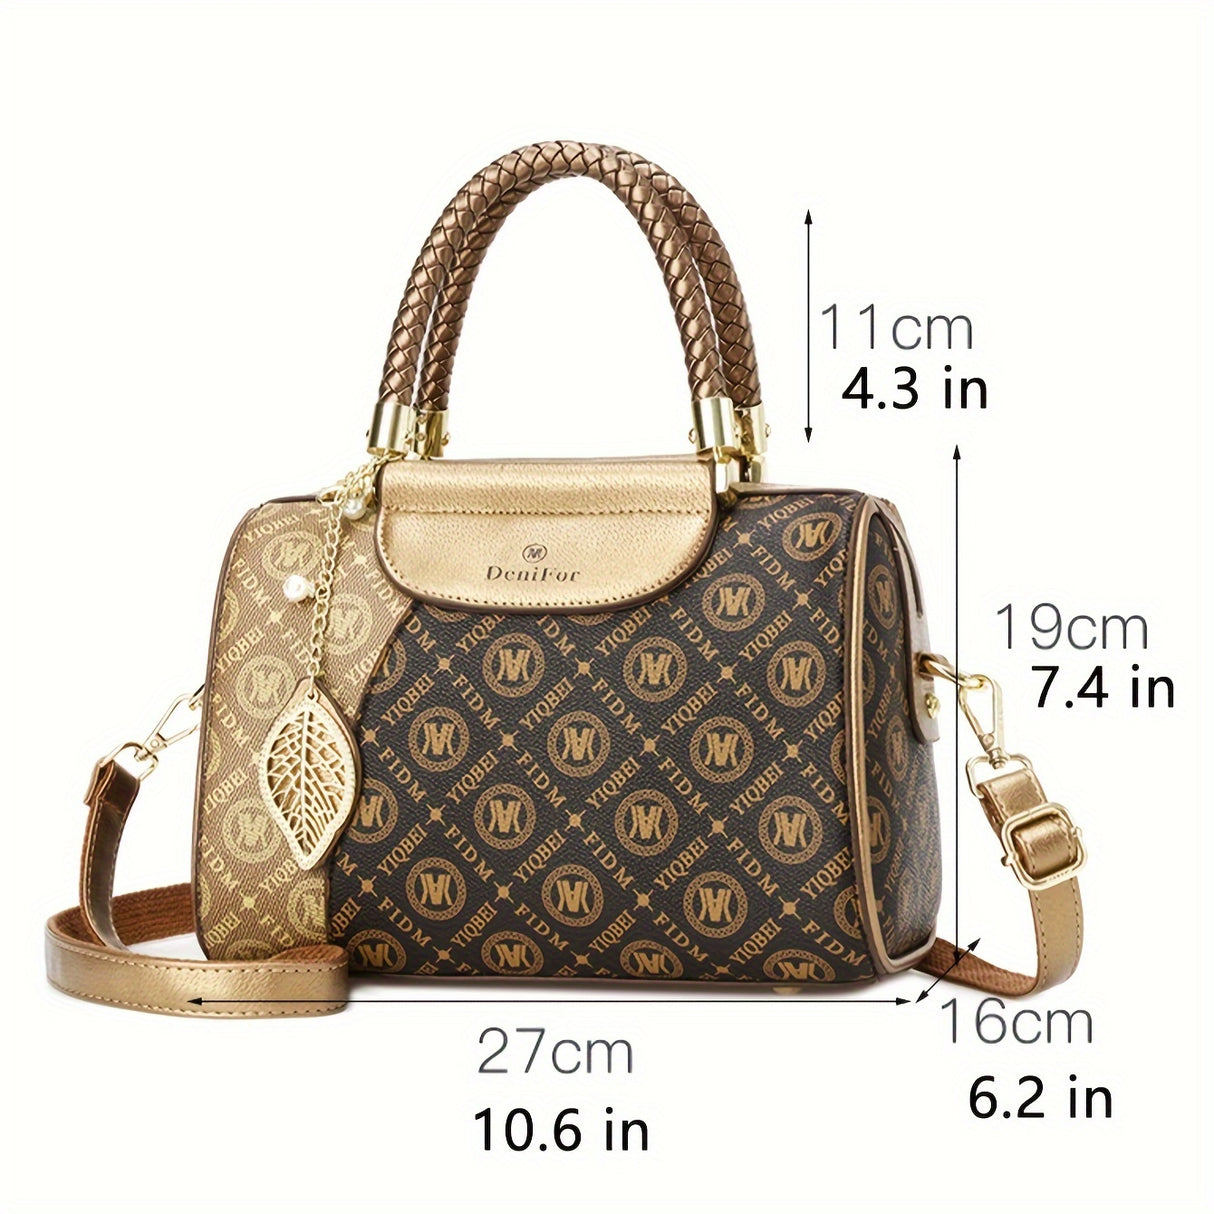 Provain Shop Luxury Top Handle Boston Bag, Classic Crossbody Bag, Women's Fashion Handbag, Shoulder Bag & Purse 